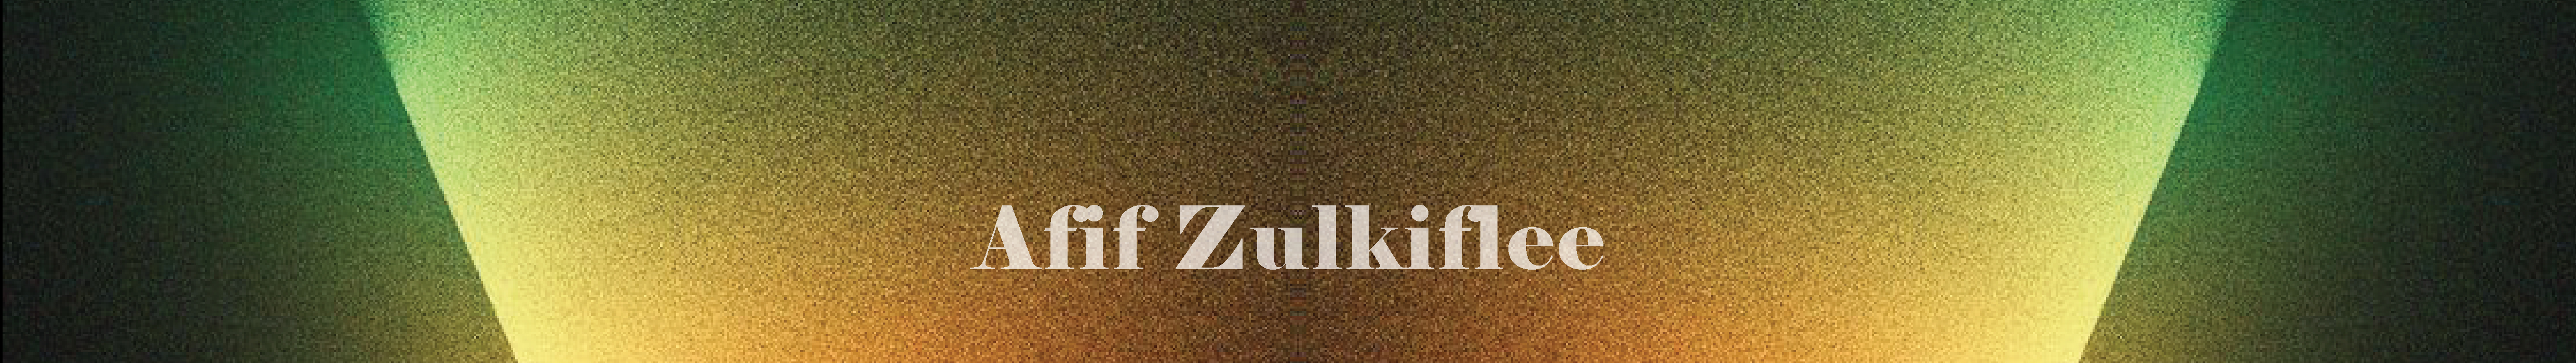 Afif Zulkiflee のプロファイルバナー